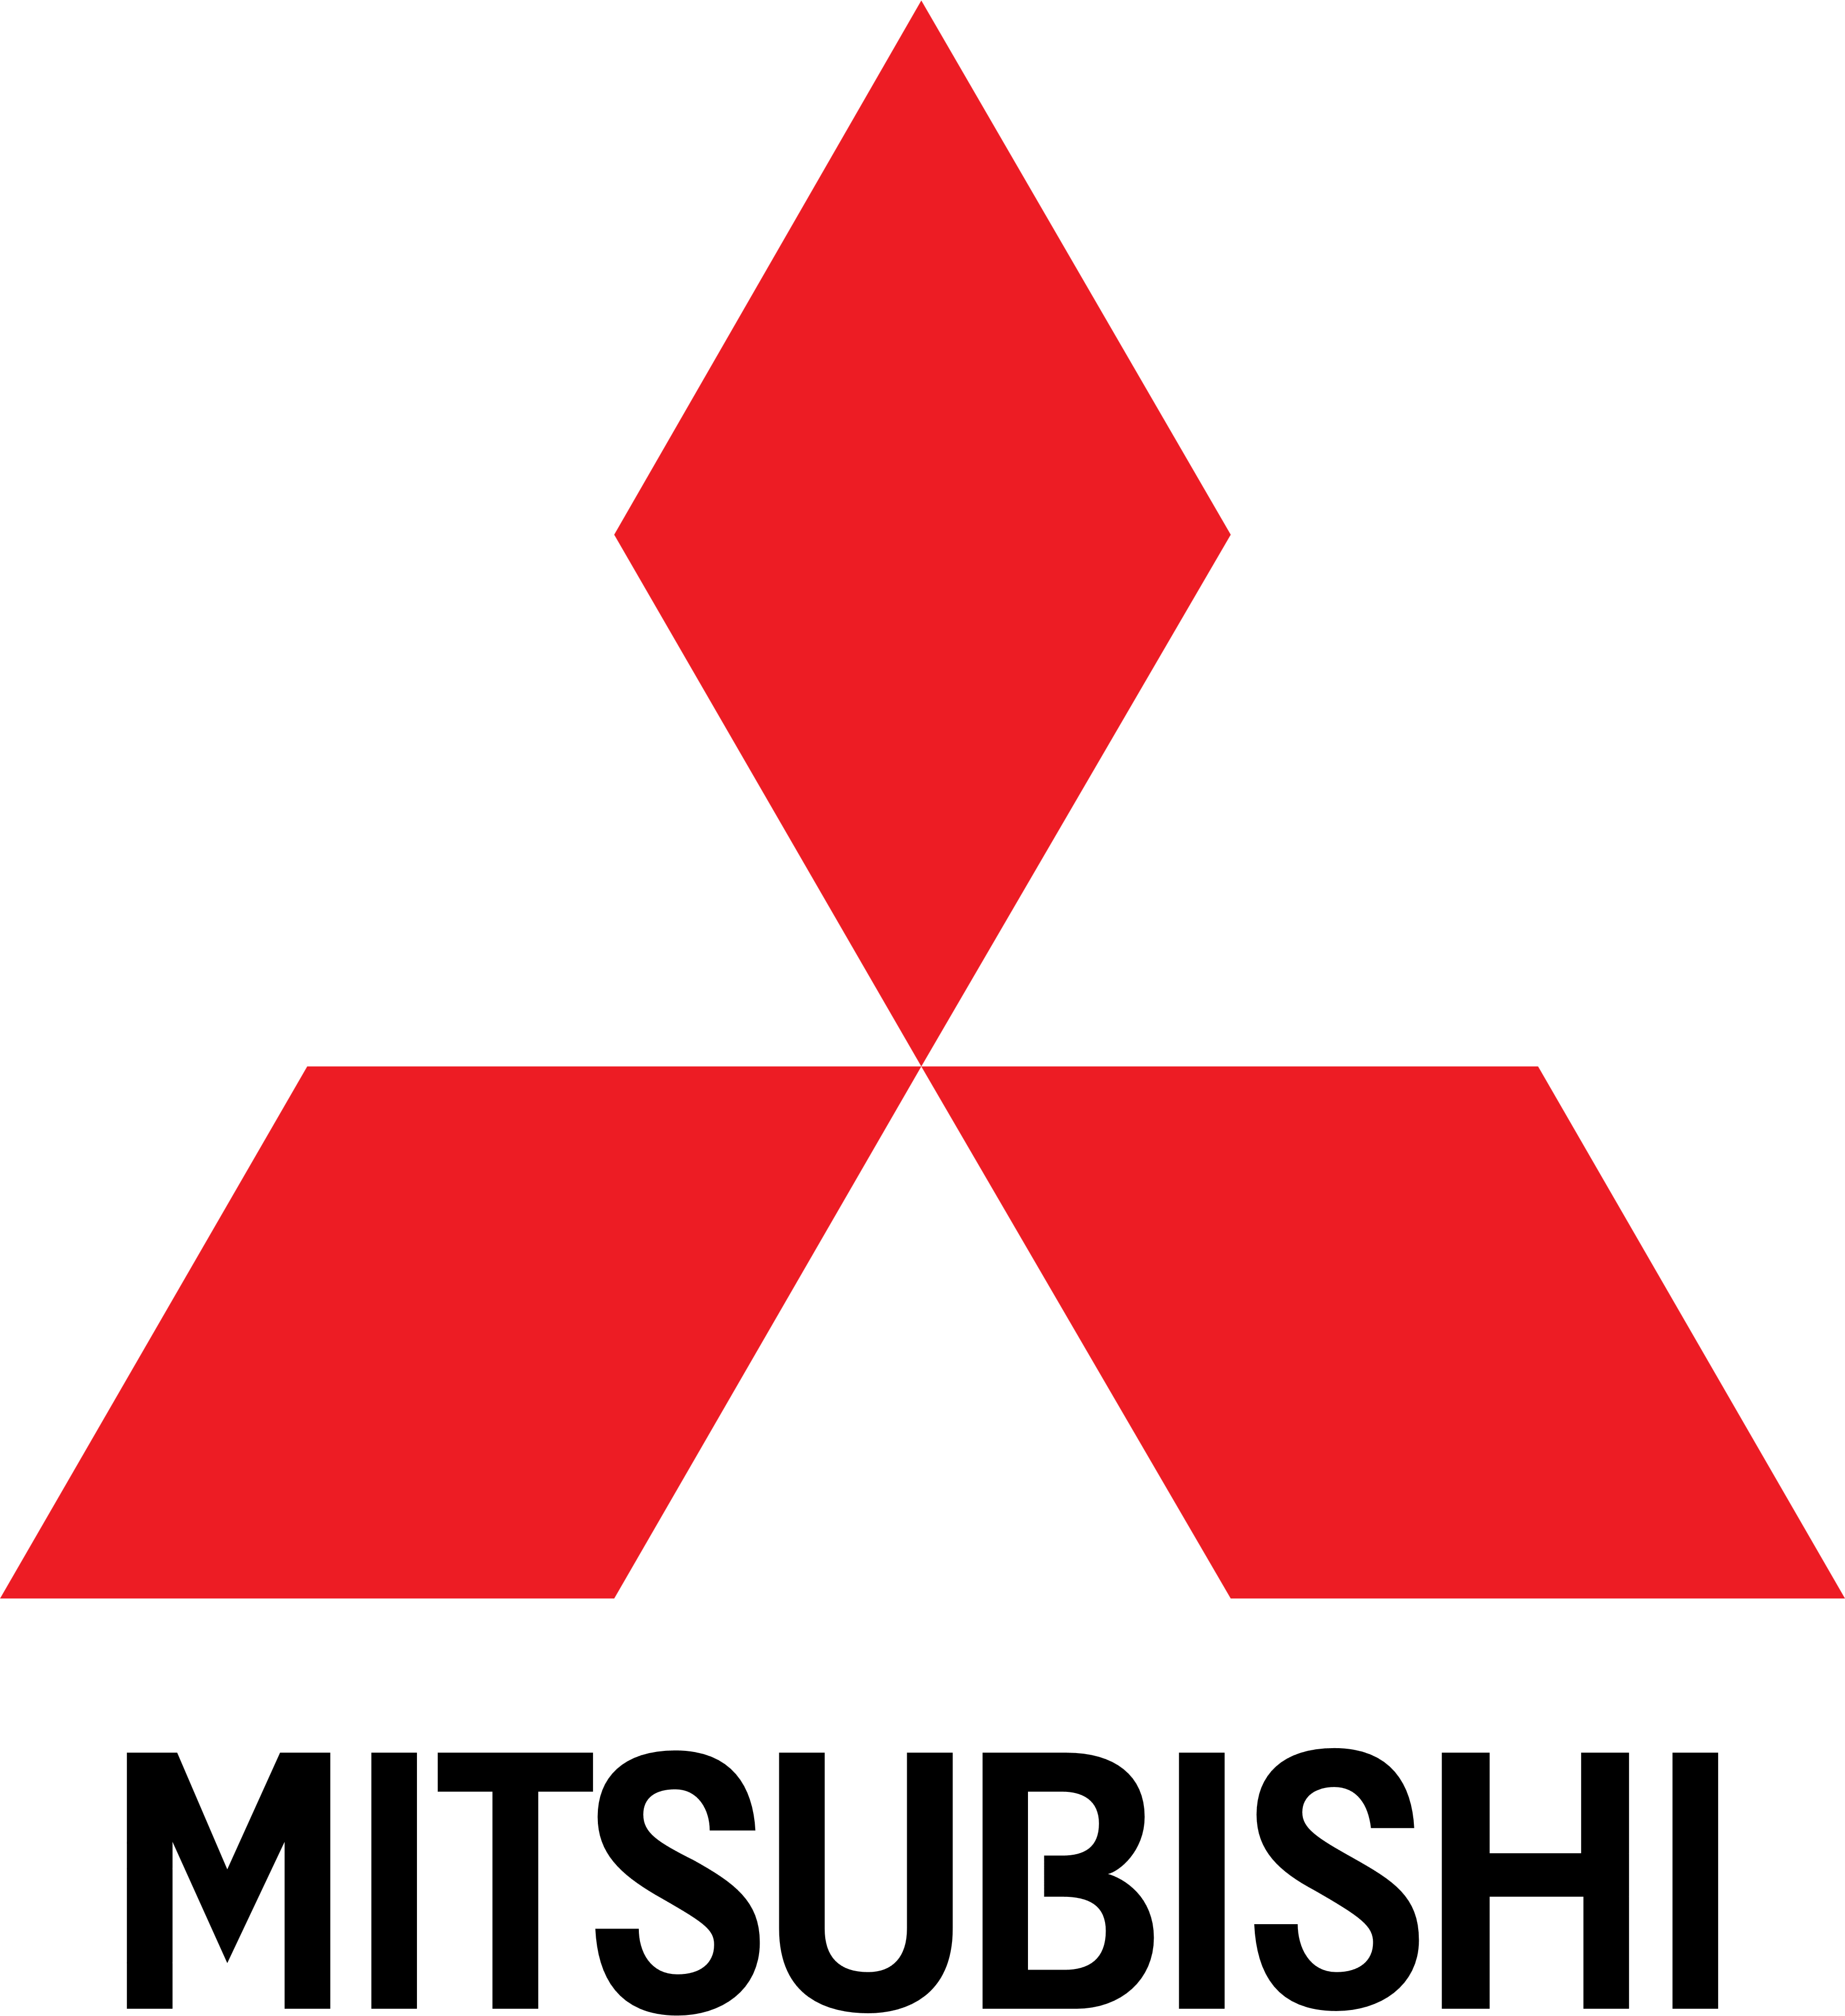 Mitsubishi | Polaris Automation Technical Competencies